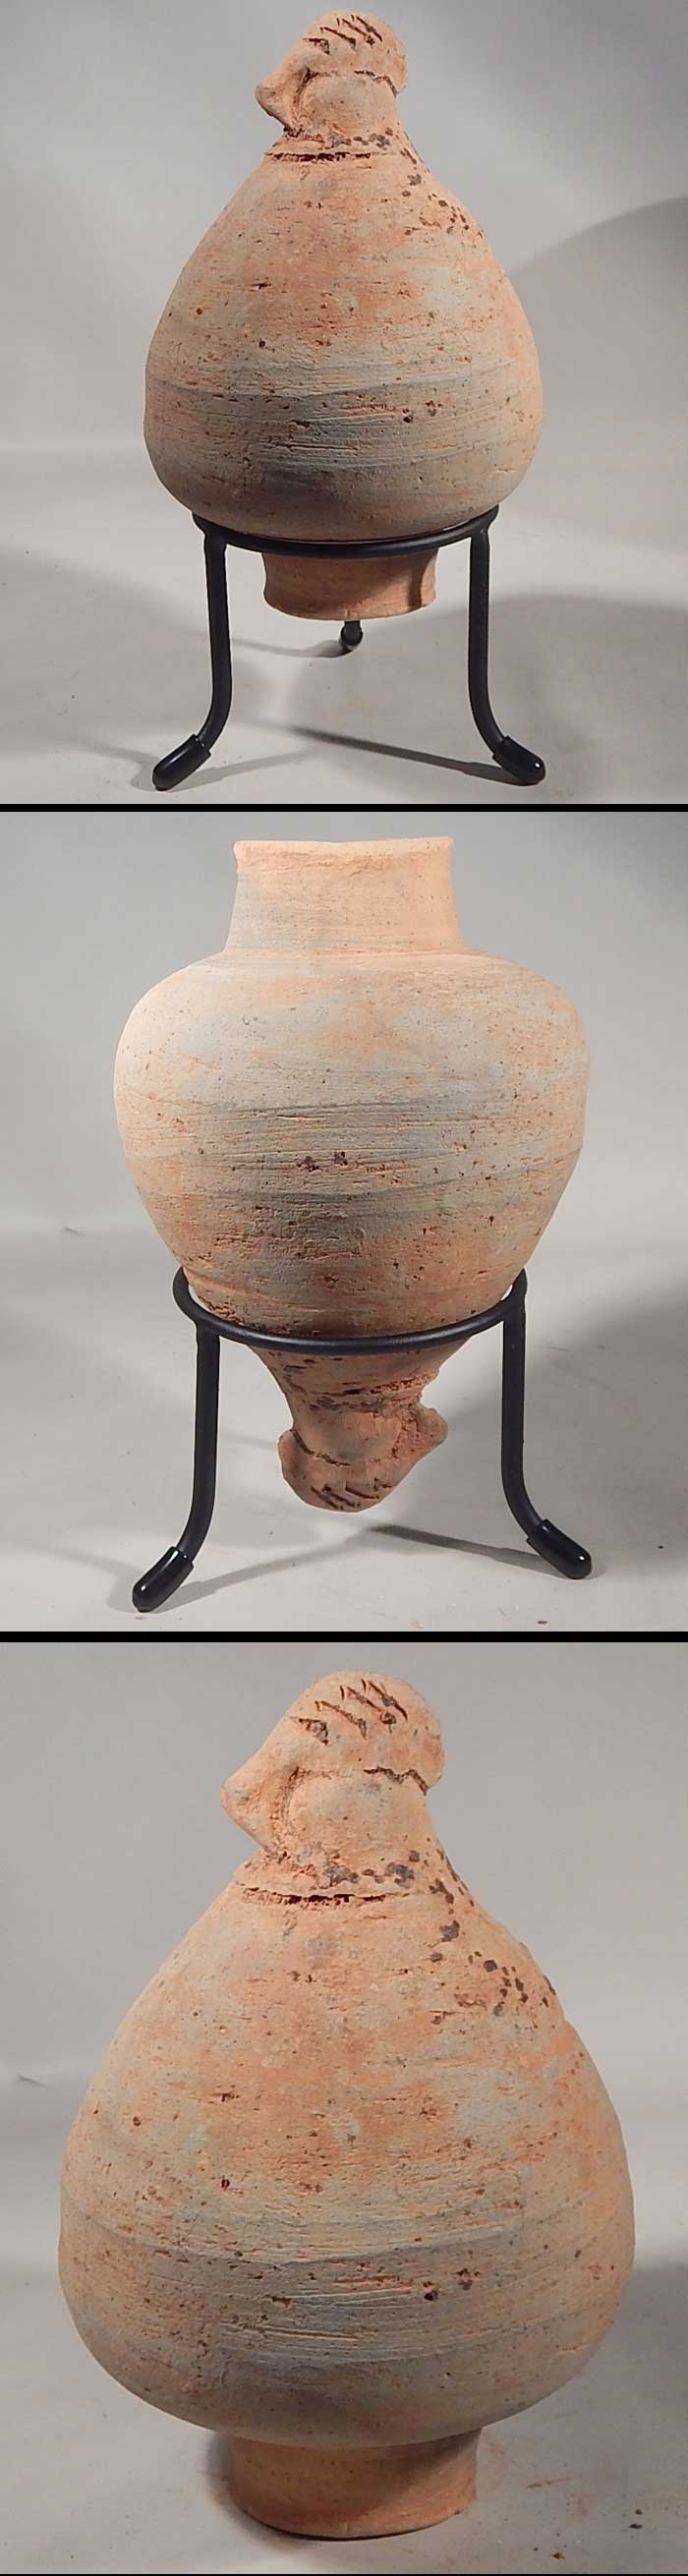 Han Dynasty Terracotta Pottery Lid Vase